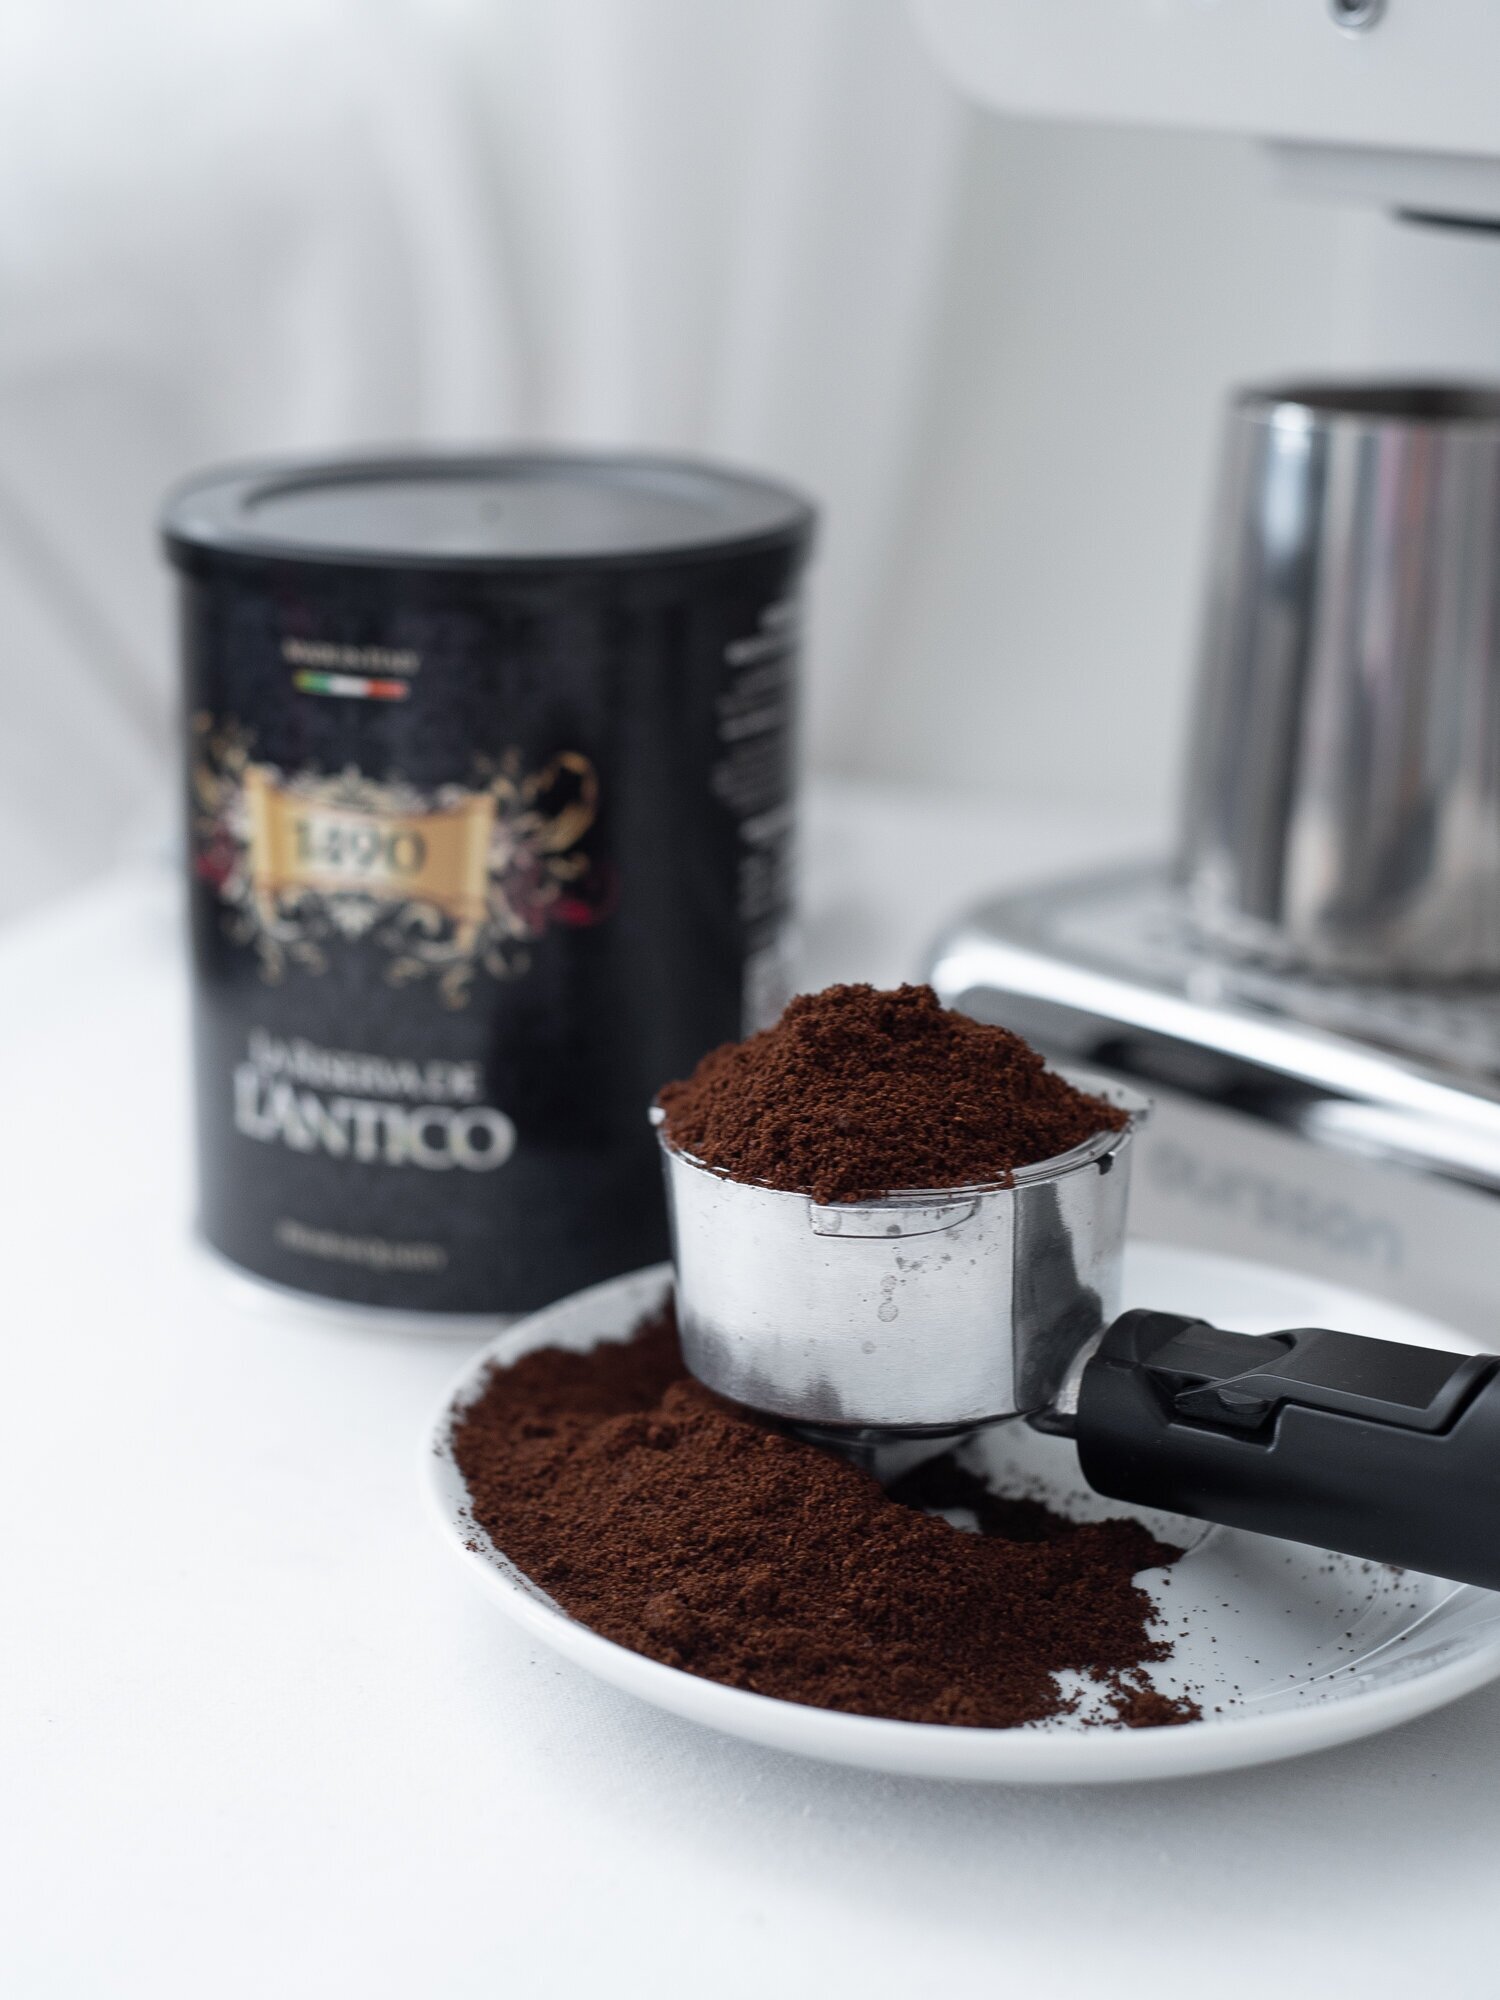 Кофе молотый Caffe Lantico 1490, 250 г - фото №5